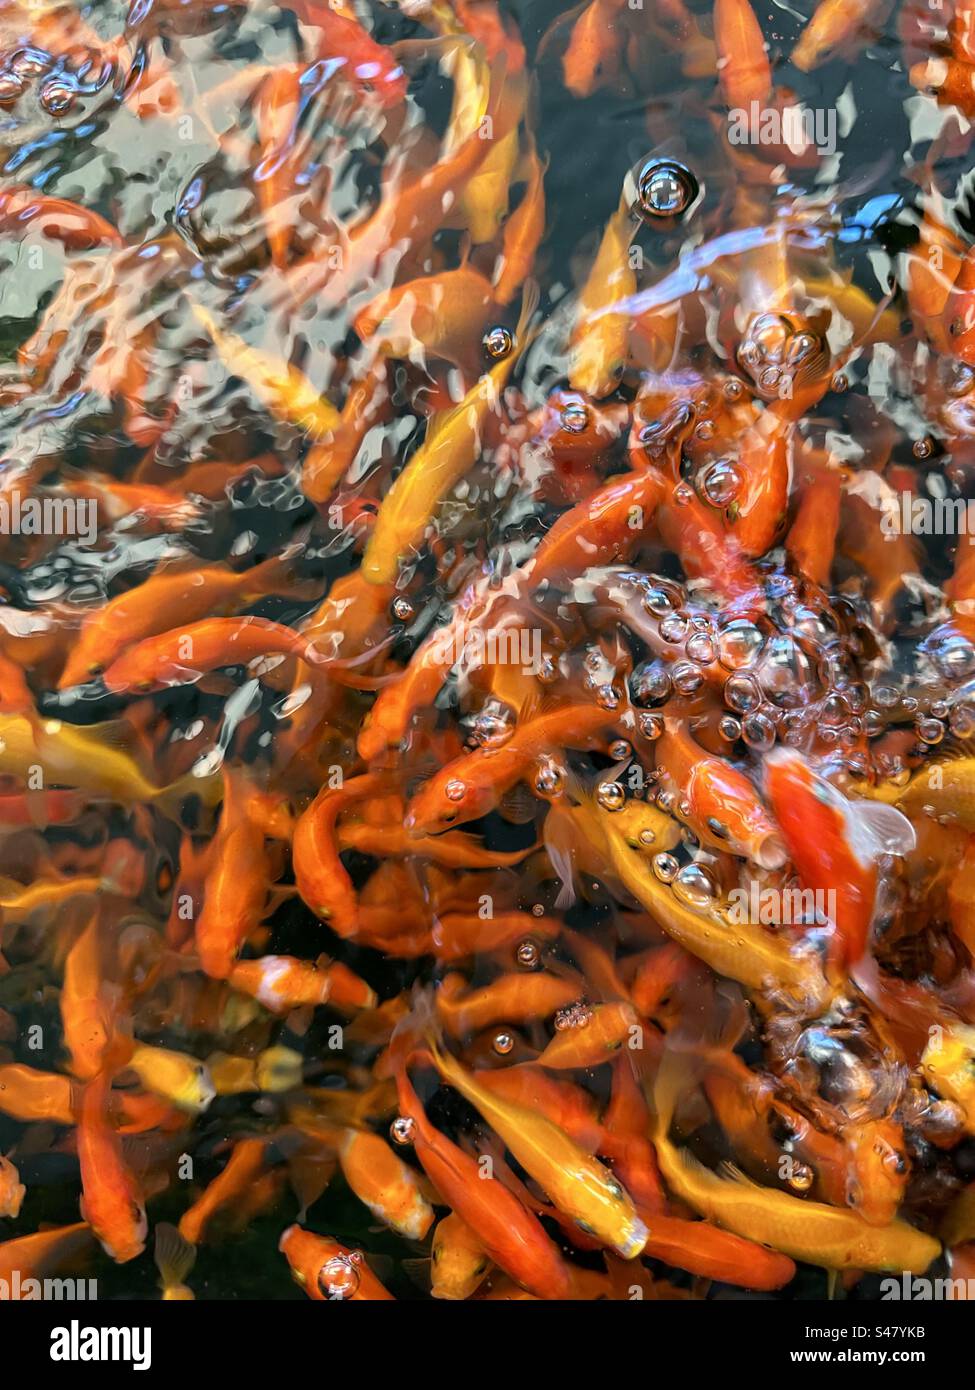 Tank full of gold fish Stock Photo